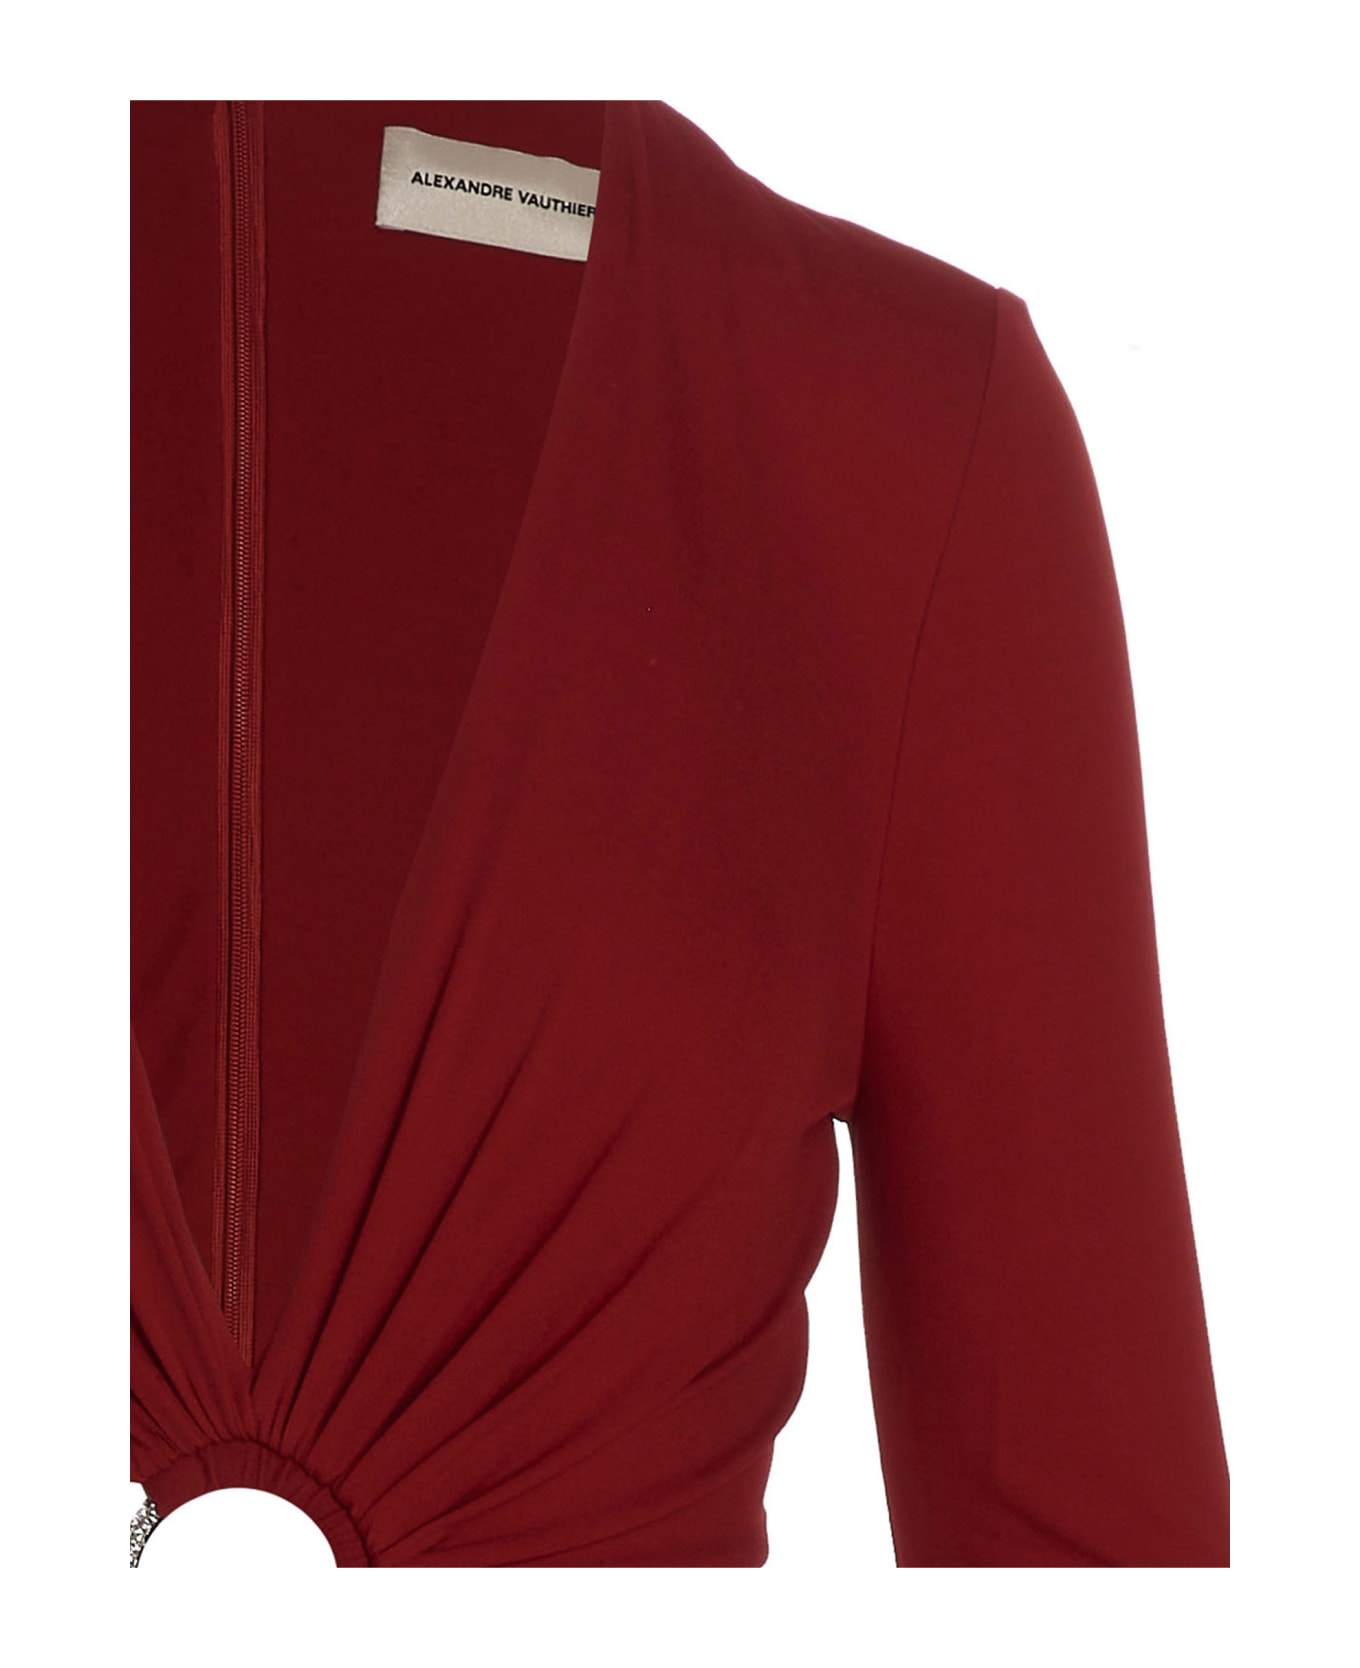 Alexandre Vauthier Cut-out Long Dress - Red